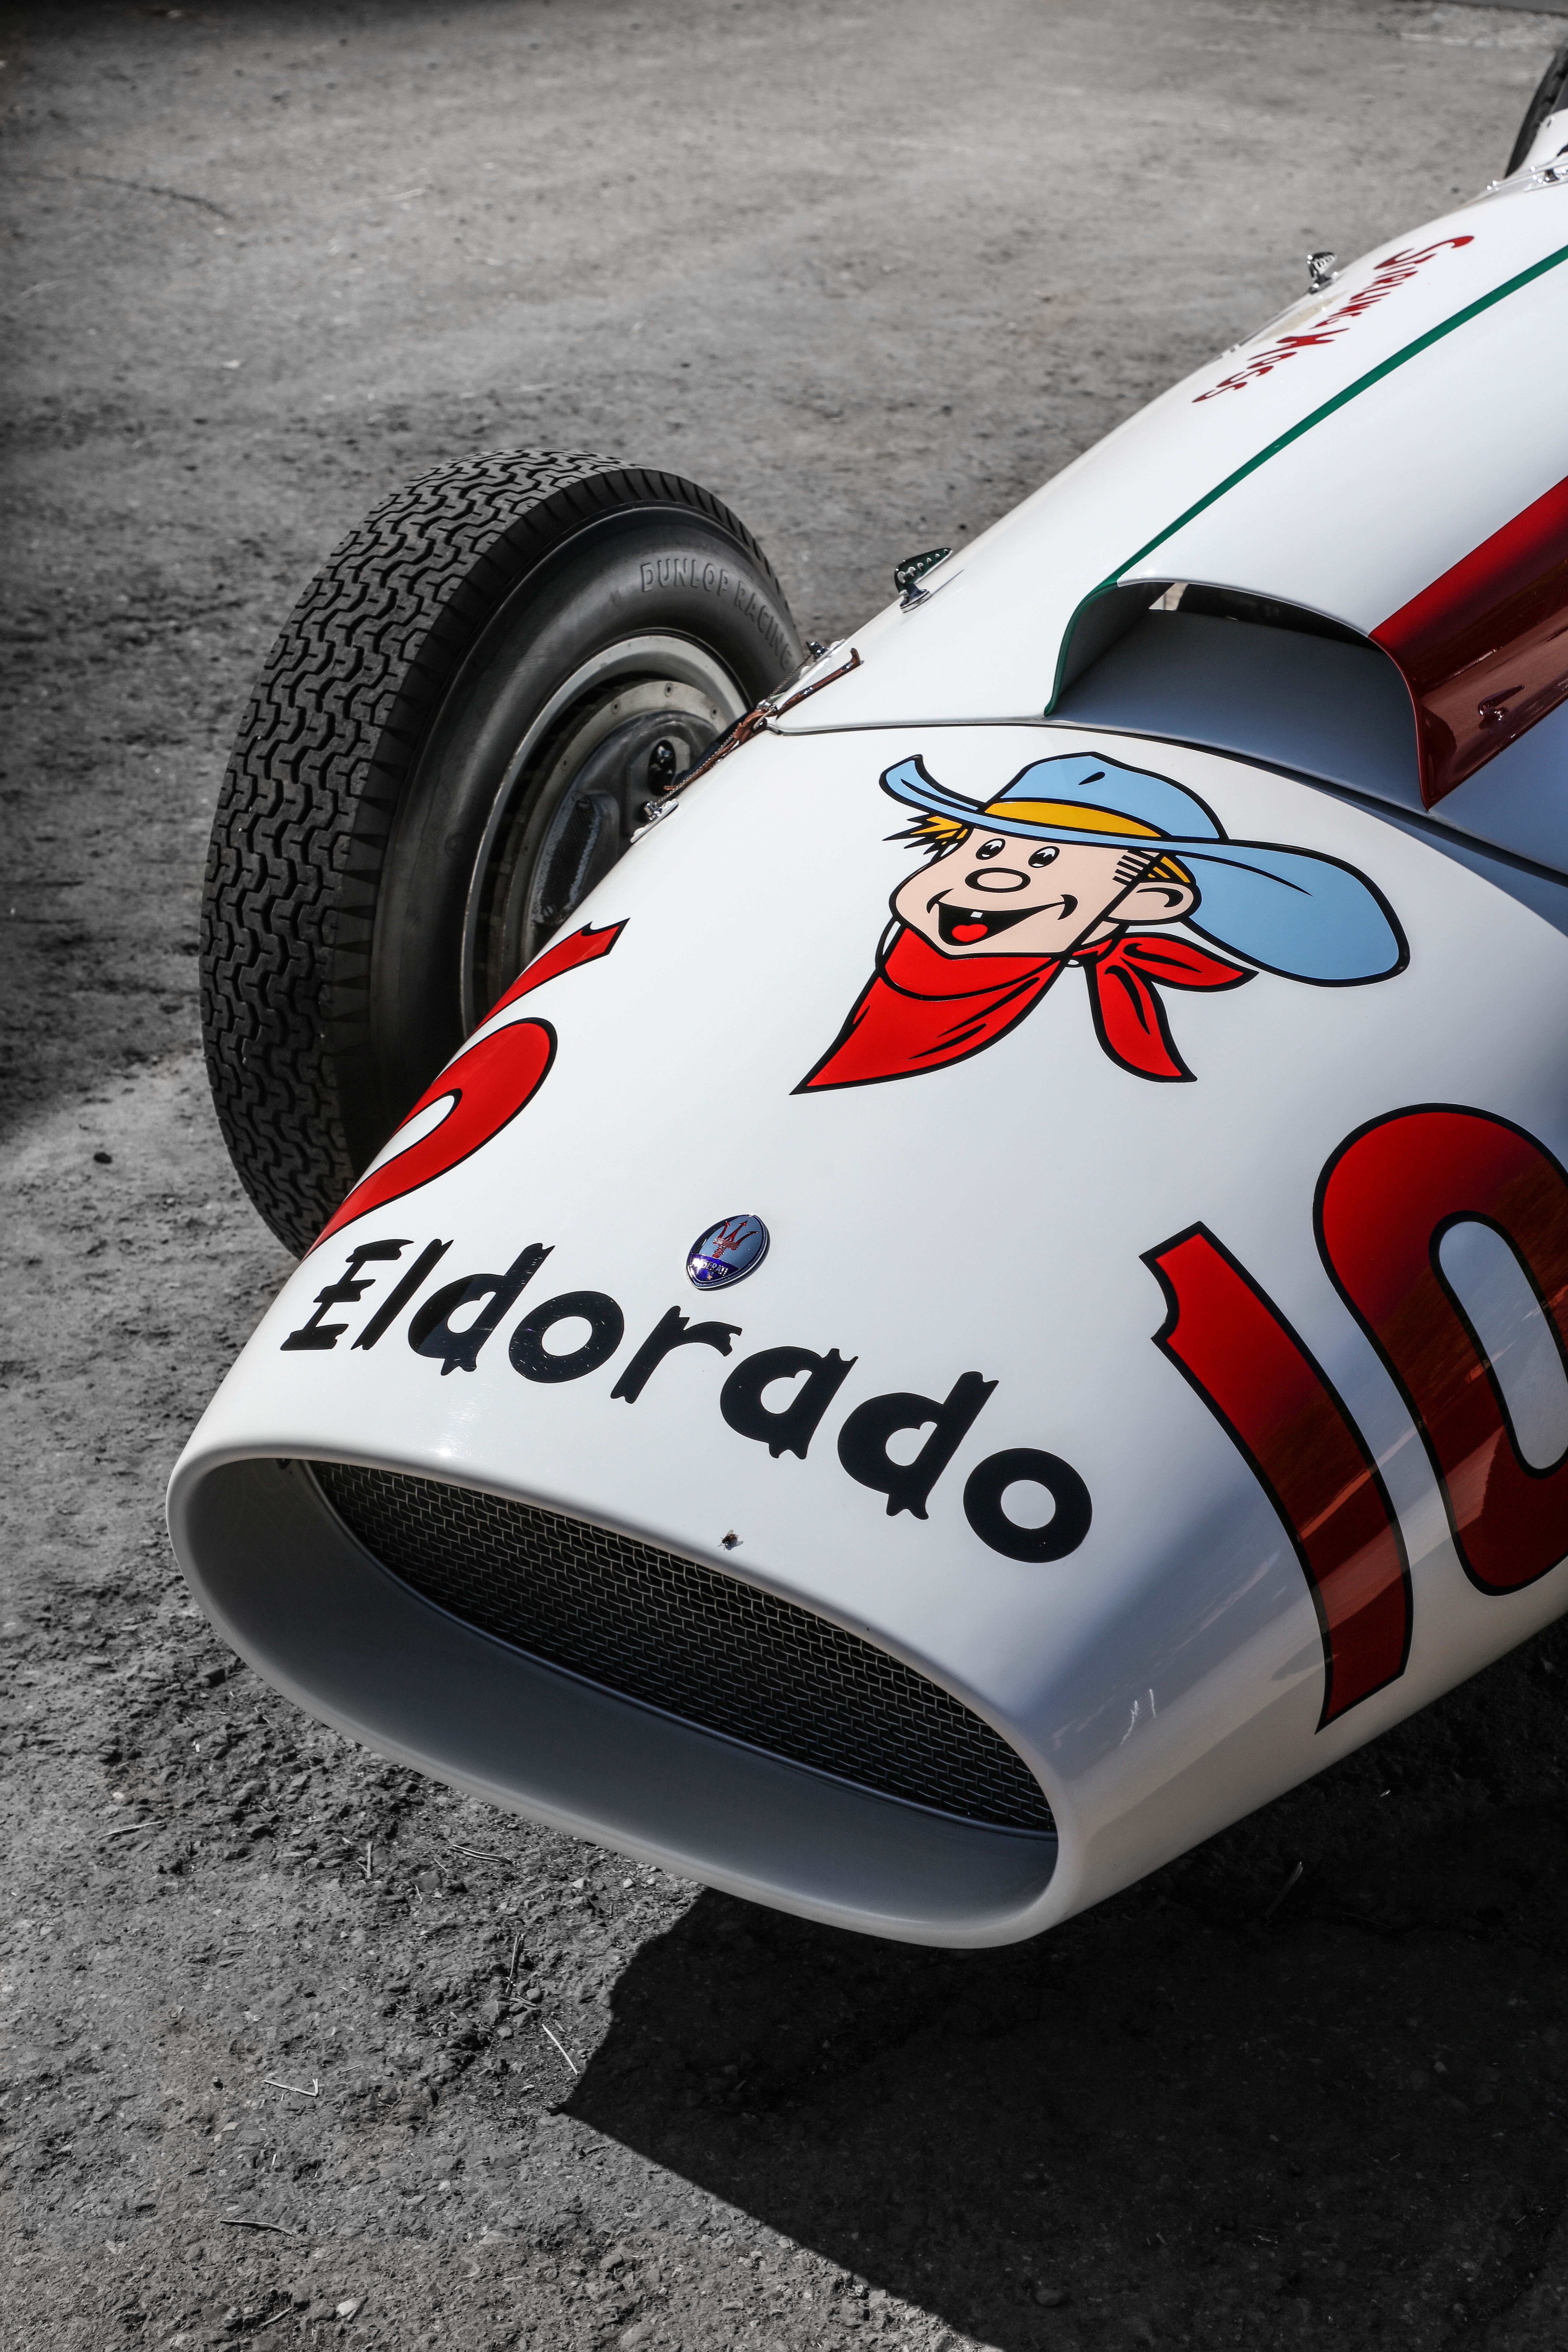 Maserati, Maserati celebrates 60th anniversary of Eldorado racer, ClassicCars.com Journal